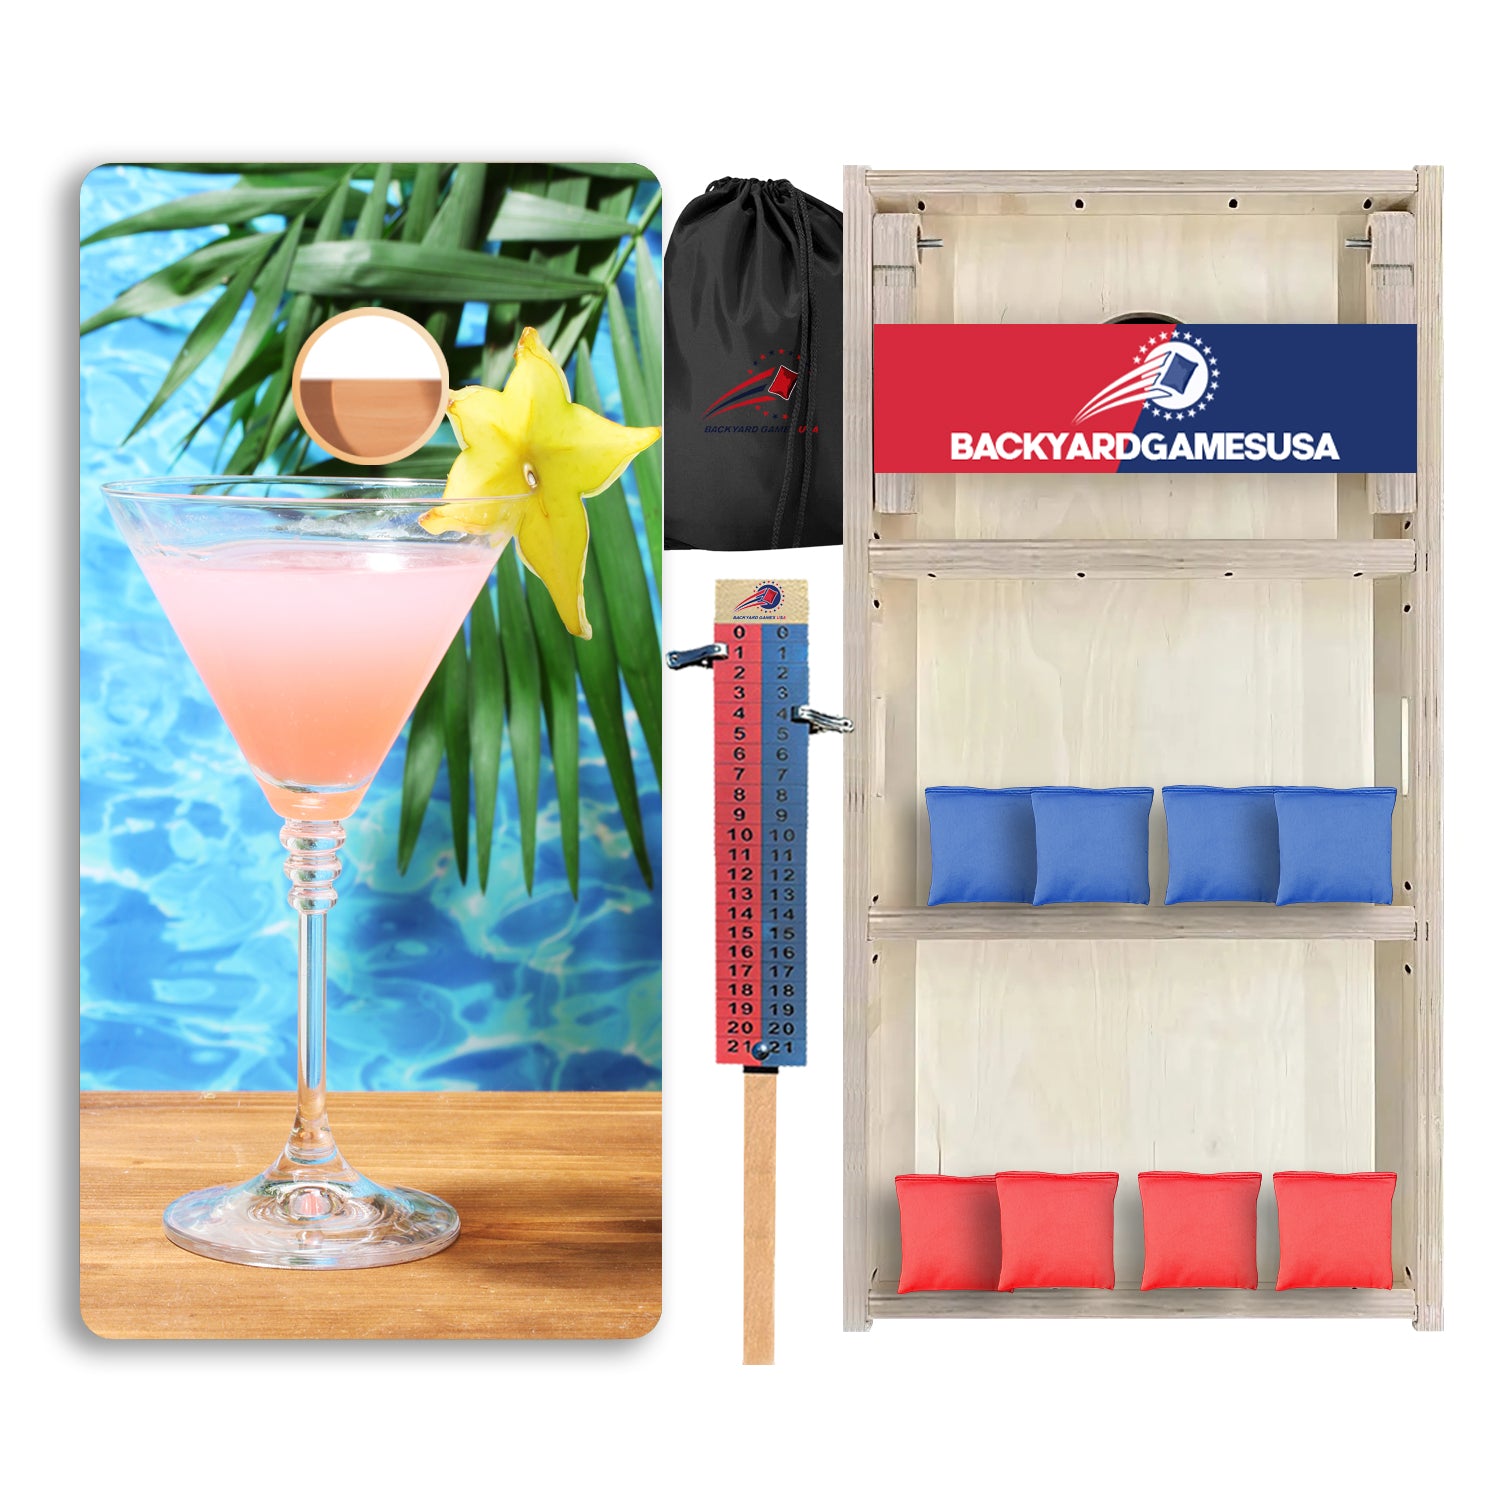 Palm Tree Ocean Professional Cornhole Boards